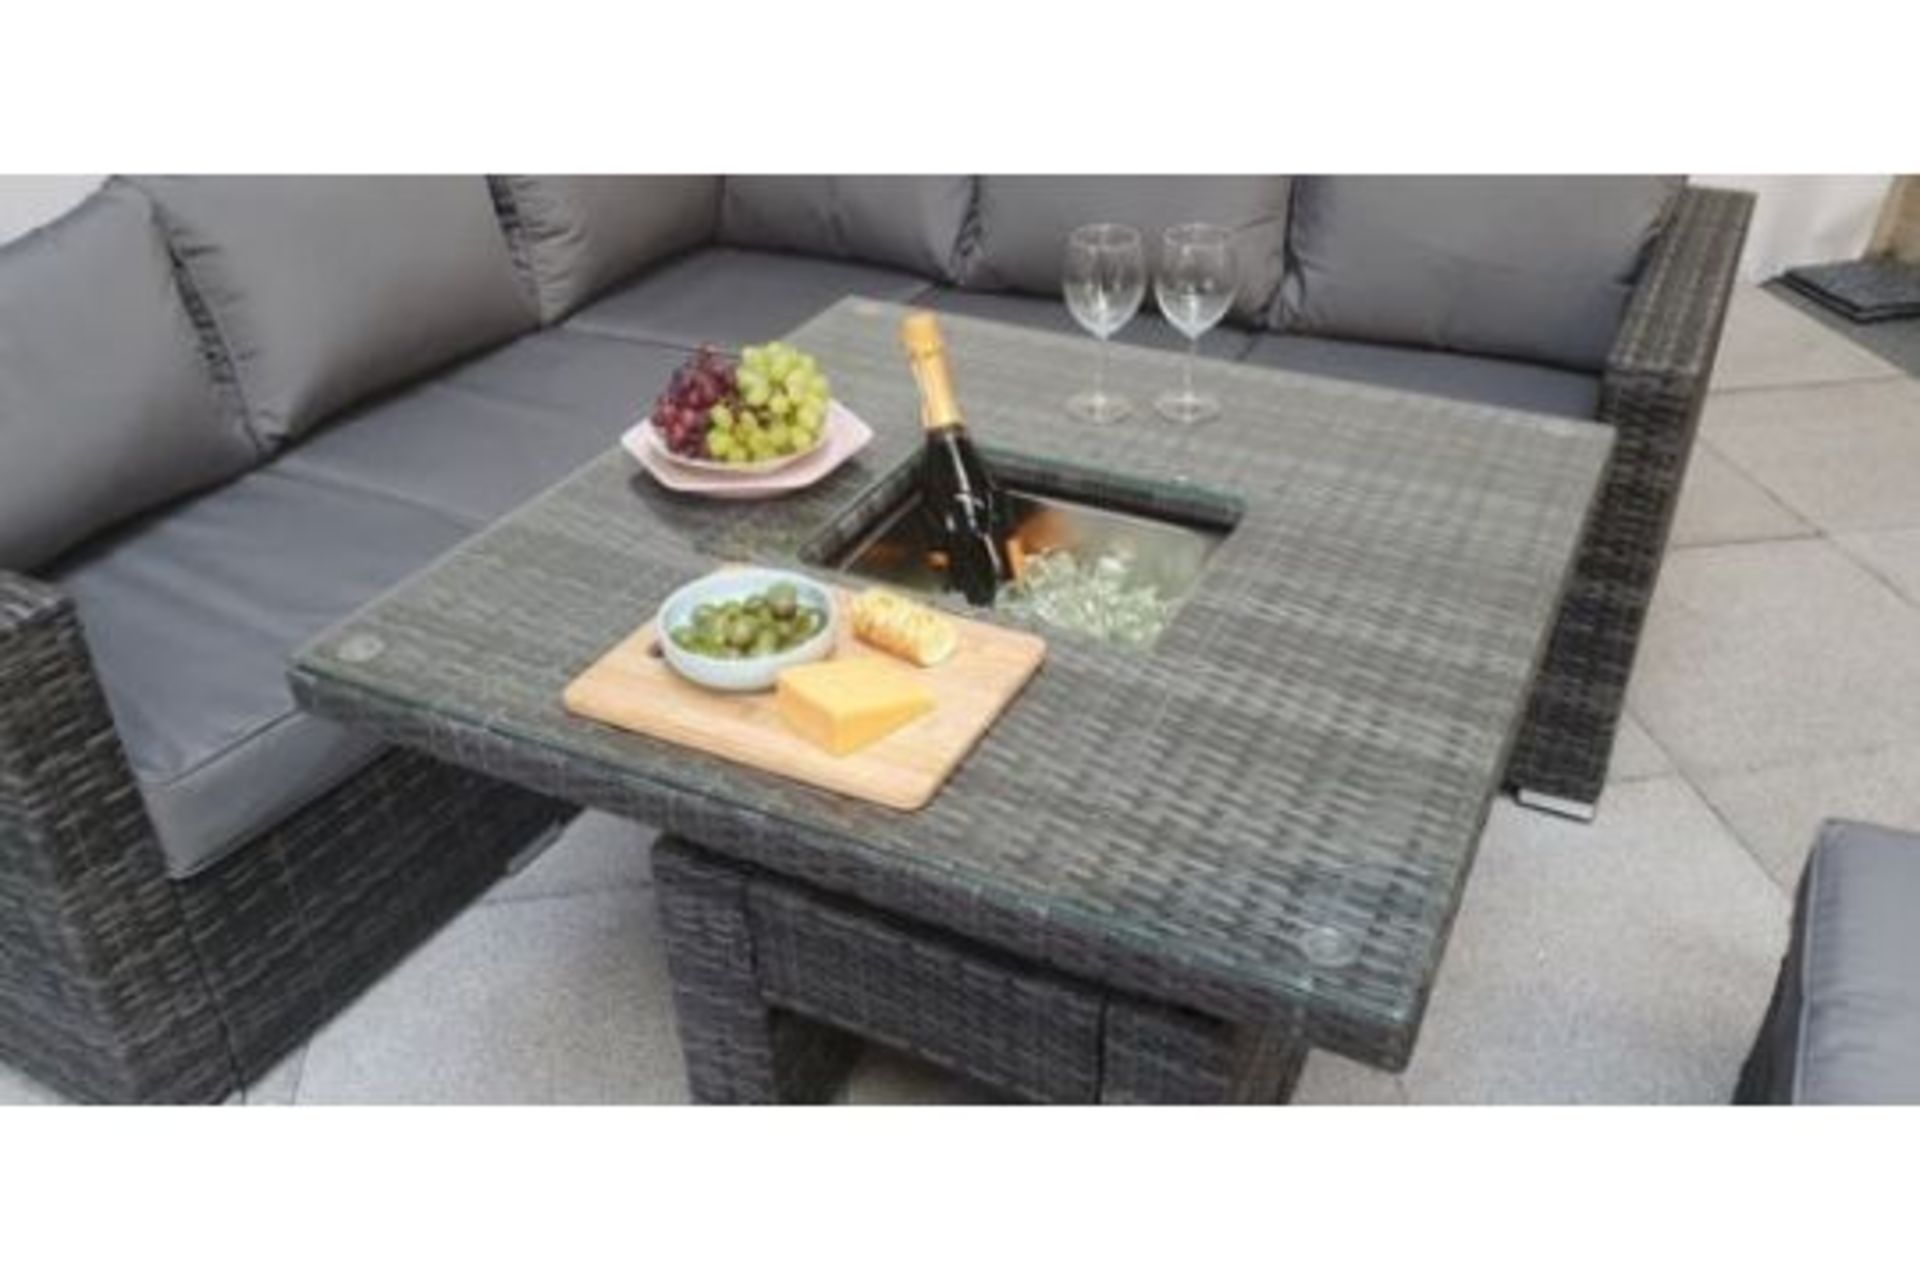 New & Boxed Luxury Signature Weave Georgia Corner Dining Set With Lift Table. RRP £1,999. Stylish - Image 2 of 2